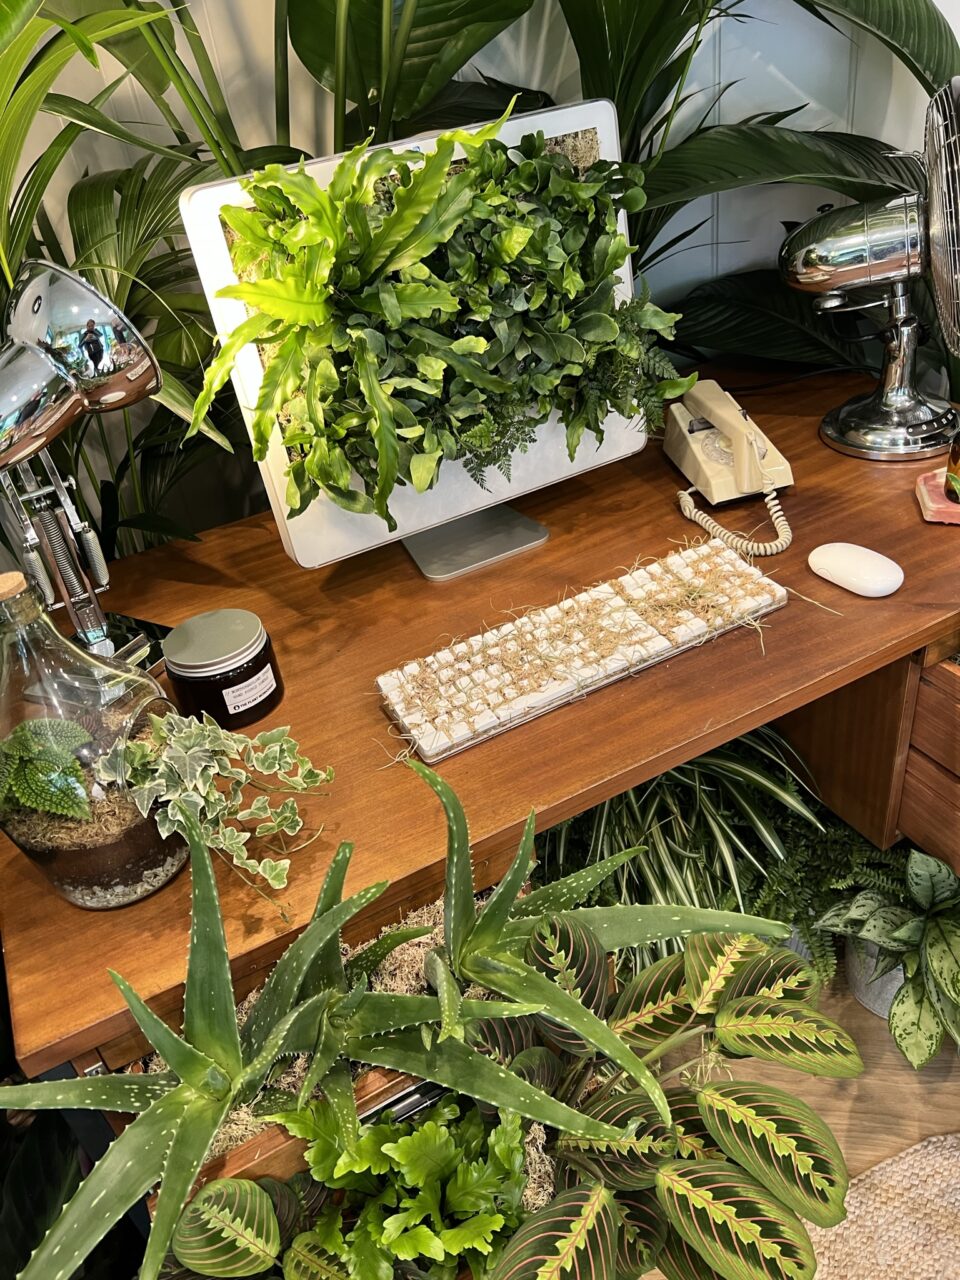 My new desk!